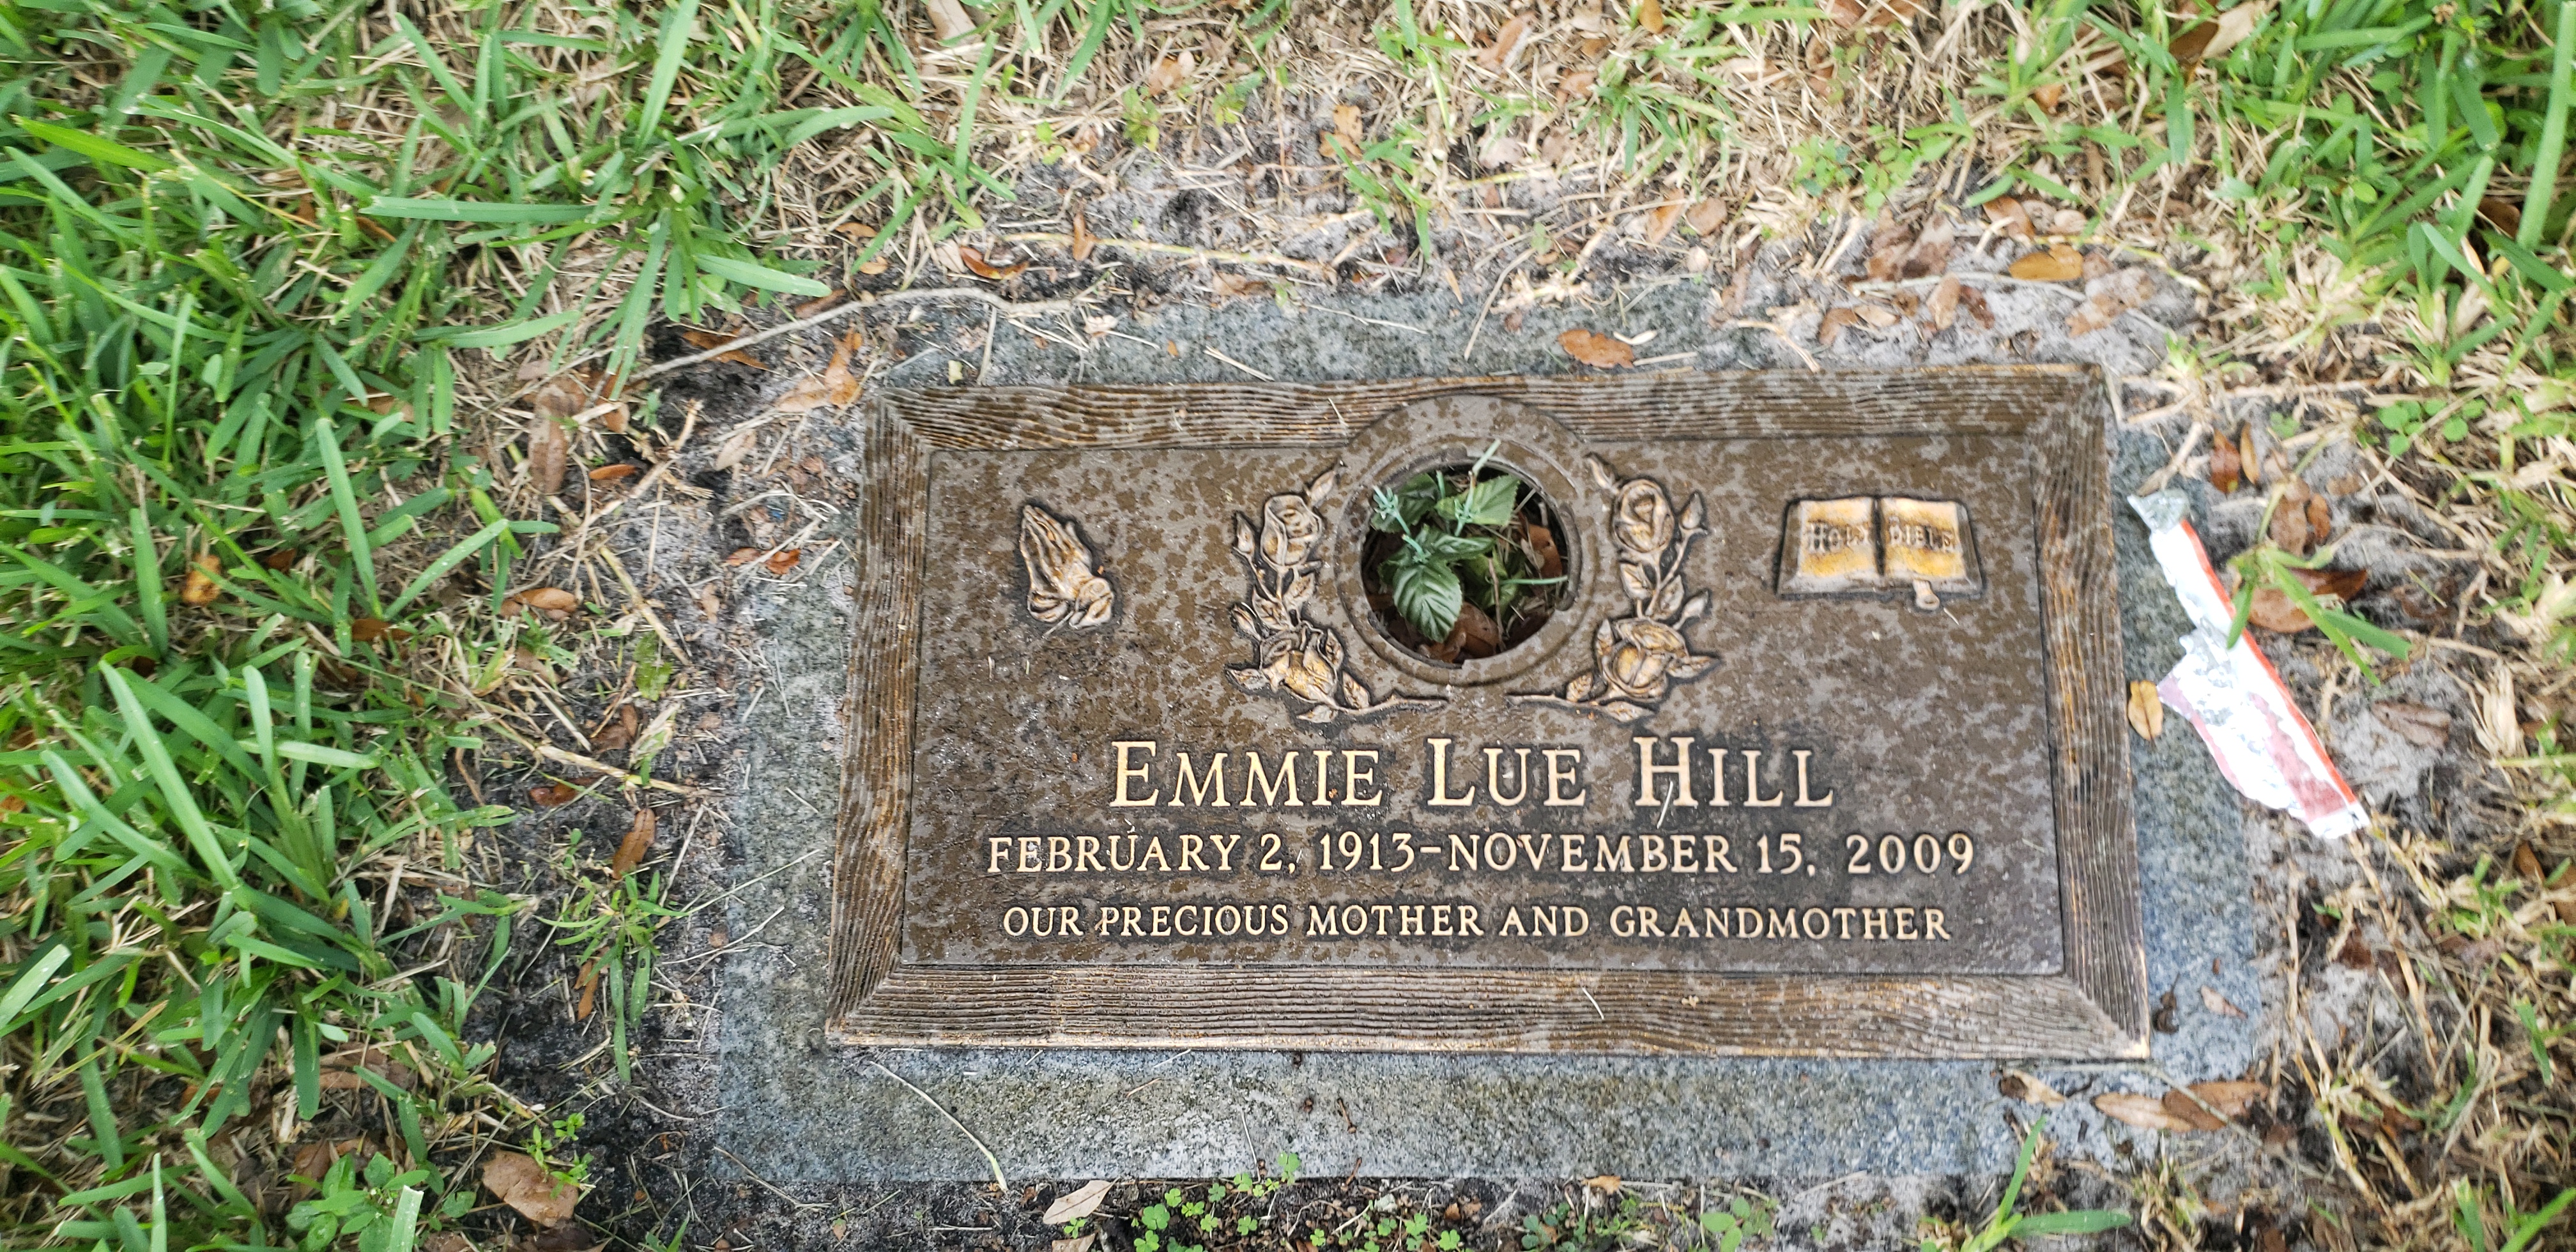 Emmie Lue Hill